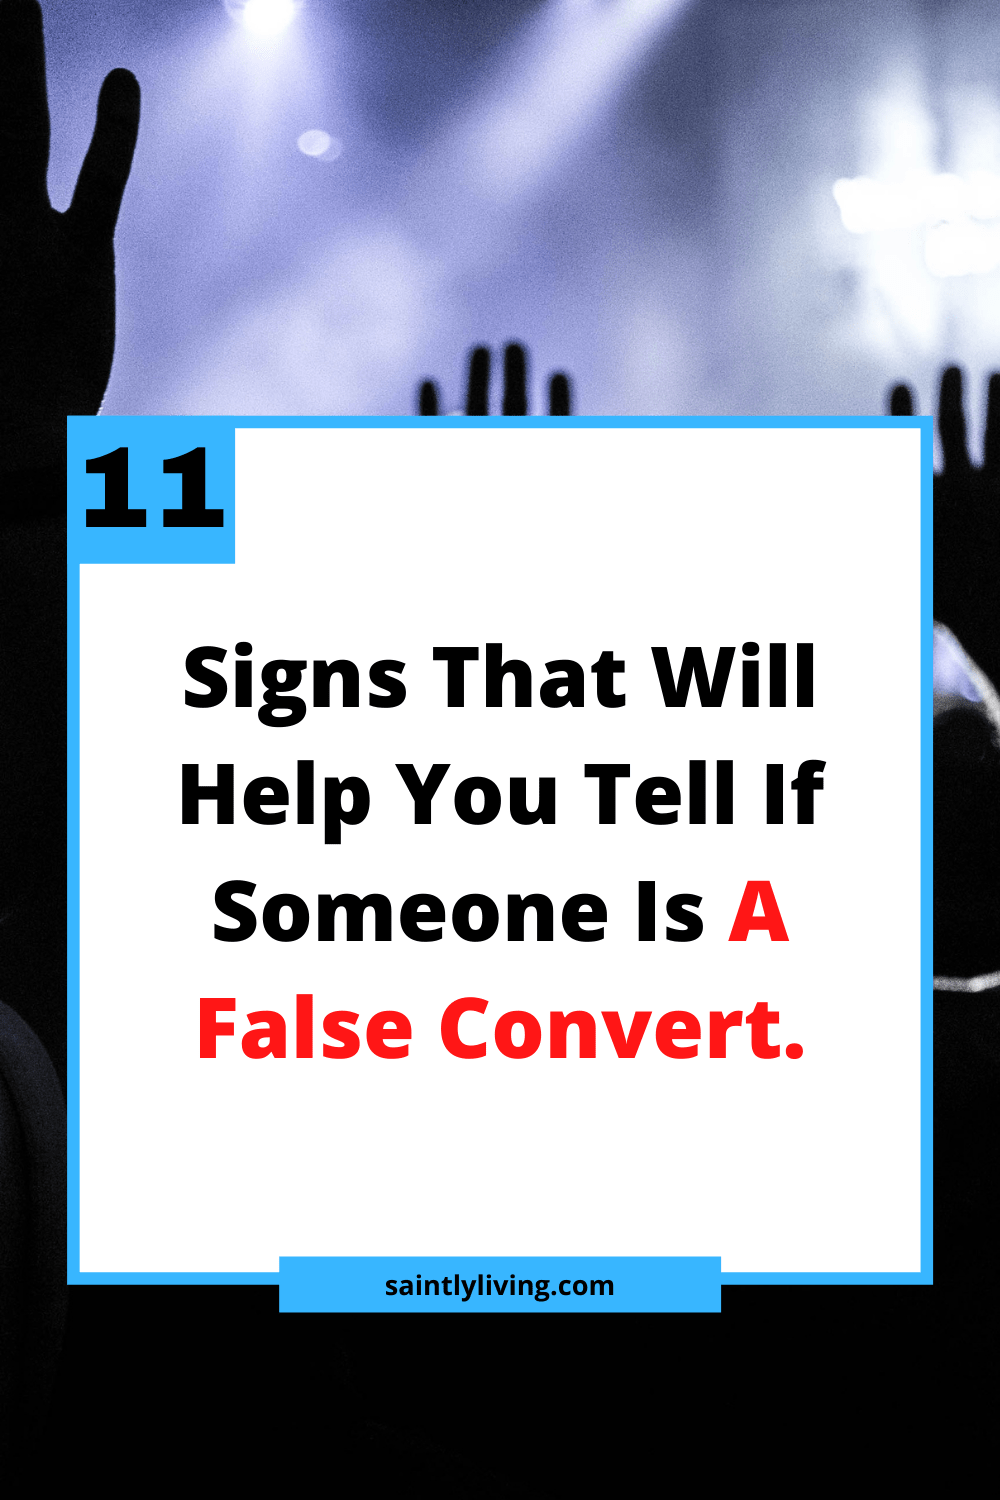  signs of false converts